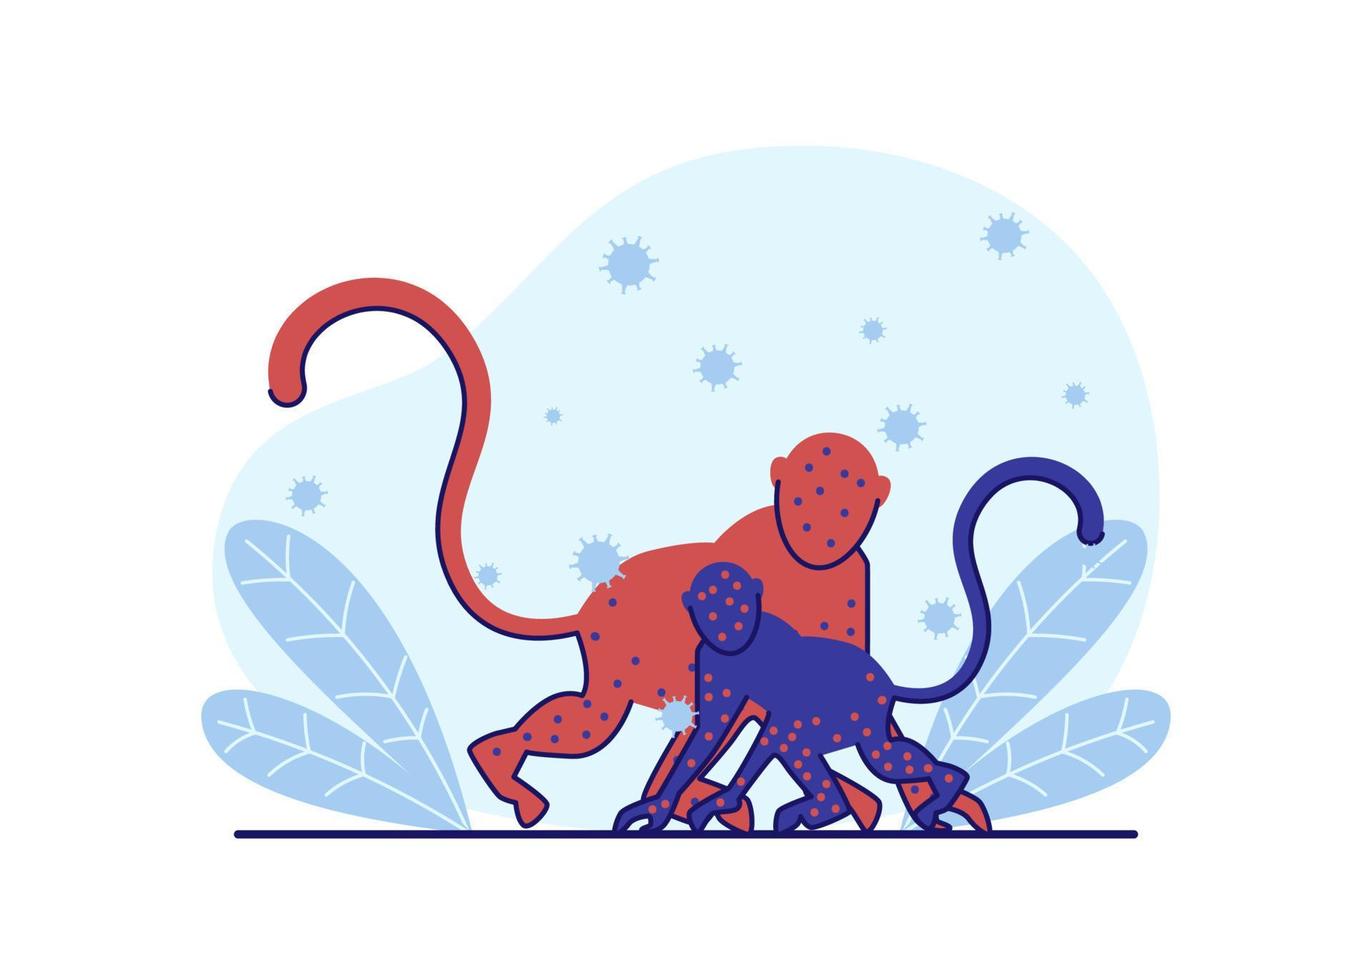 Síntomas de viruela del mono o viruela del mono vector de ilustración plana aislado. monos que contienen síntomas de viruela del simio..